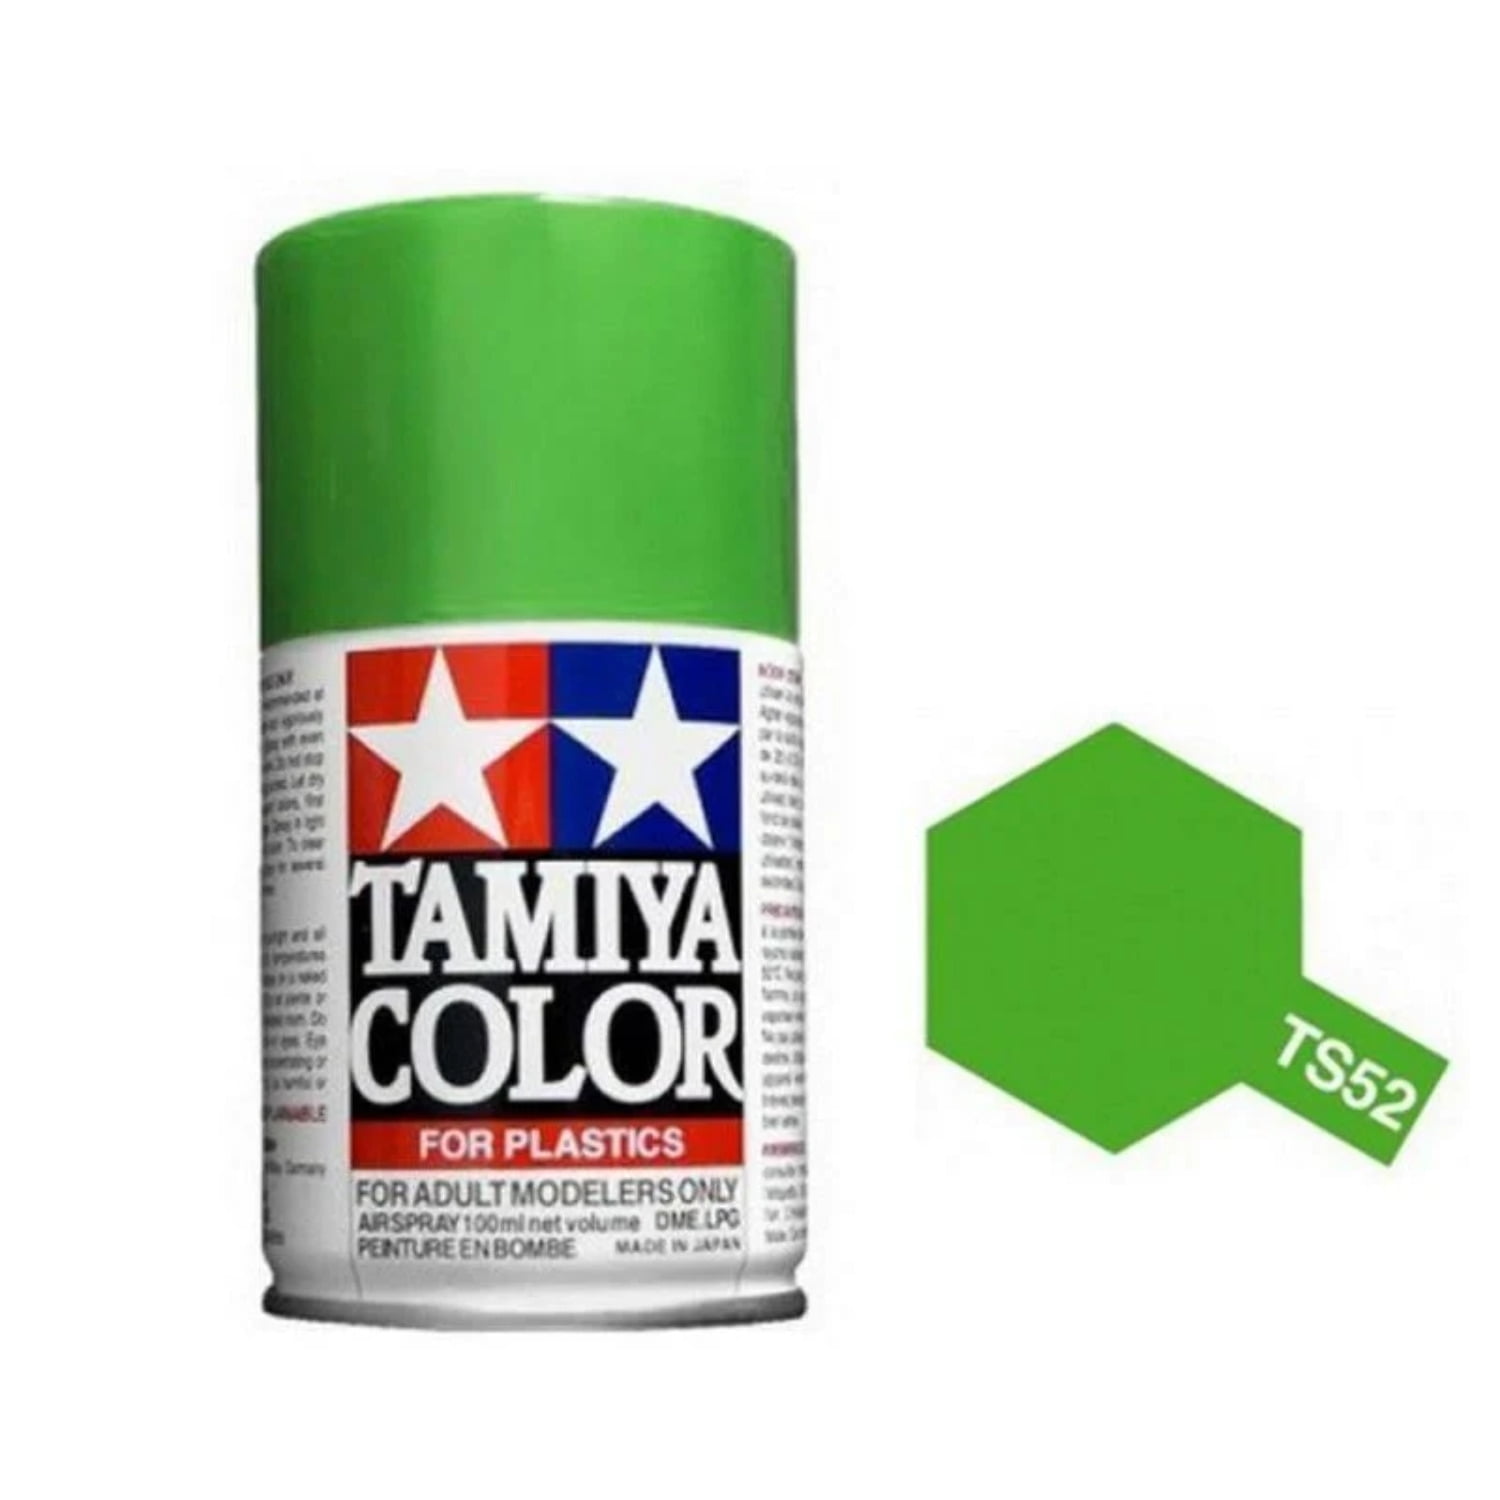 Tamiya 85079 TS-79 Semi Gloss Clear Spray Lacquer Paint Aerosol